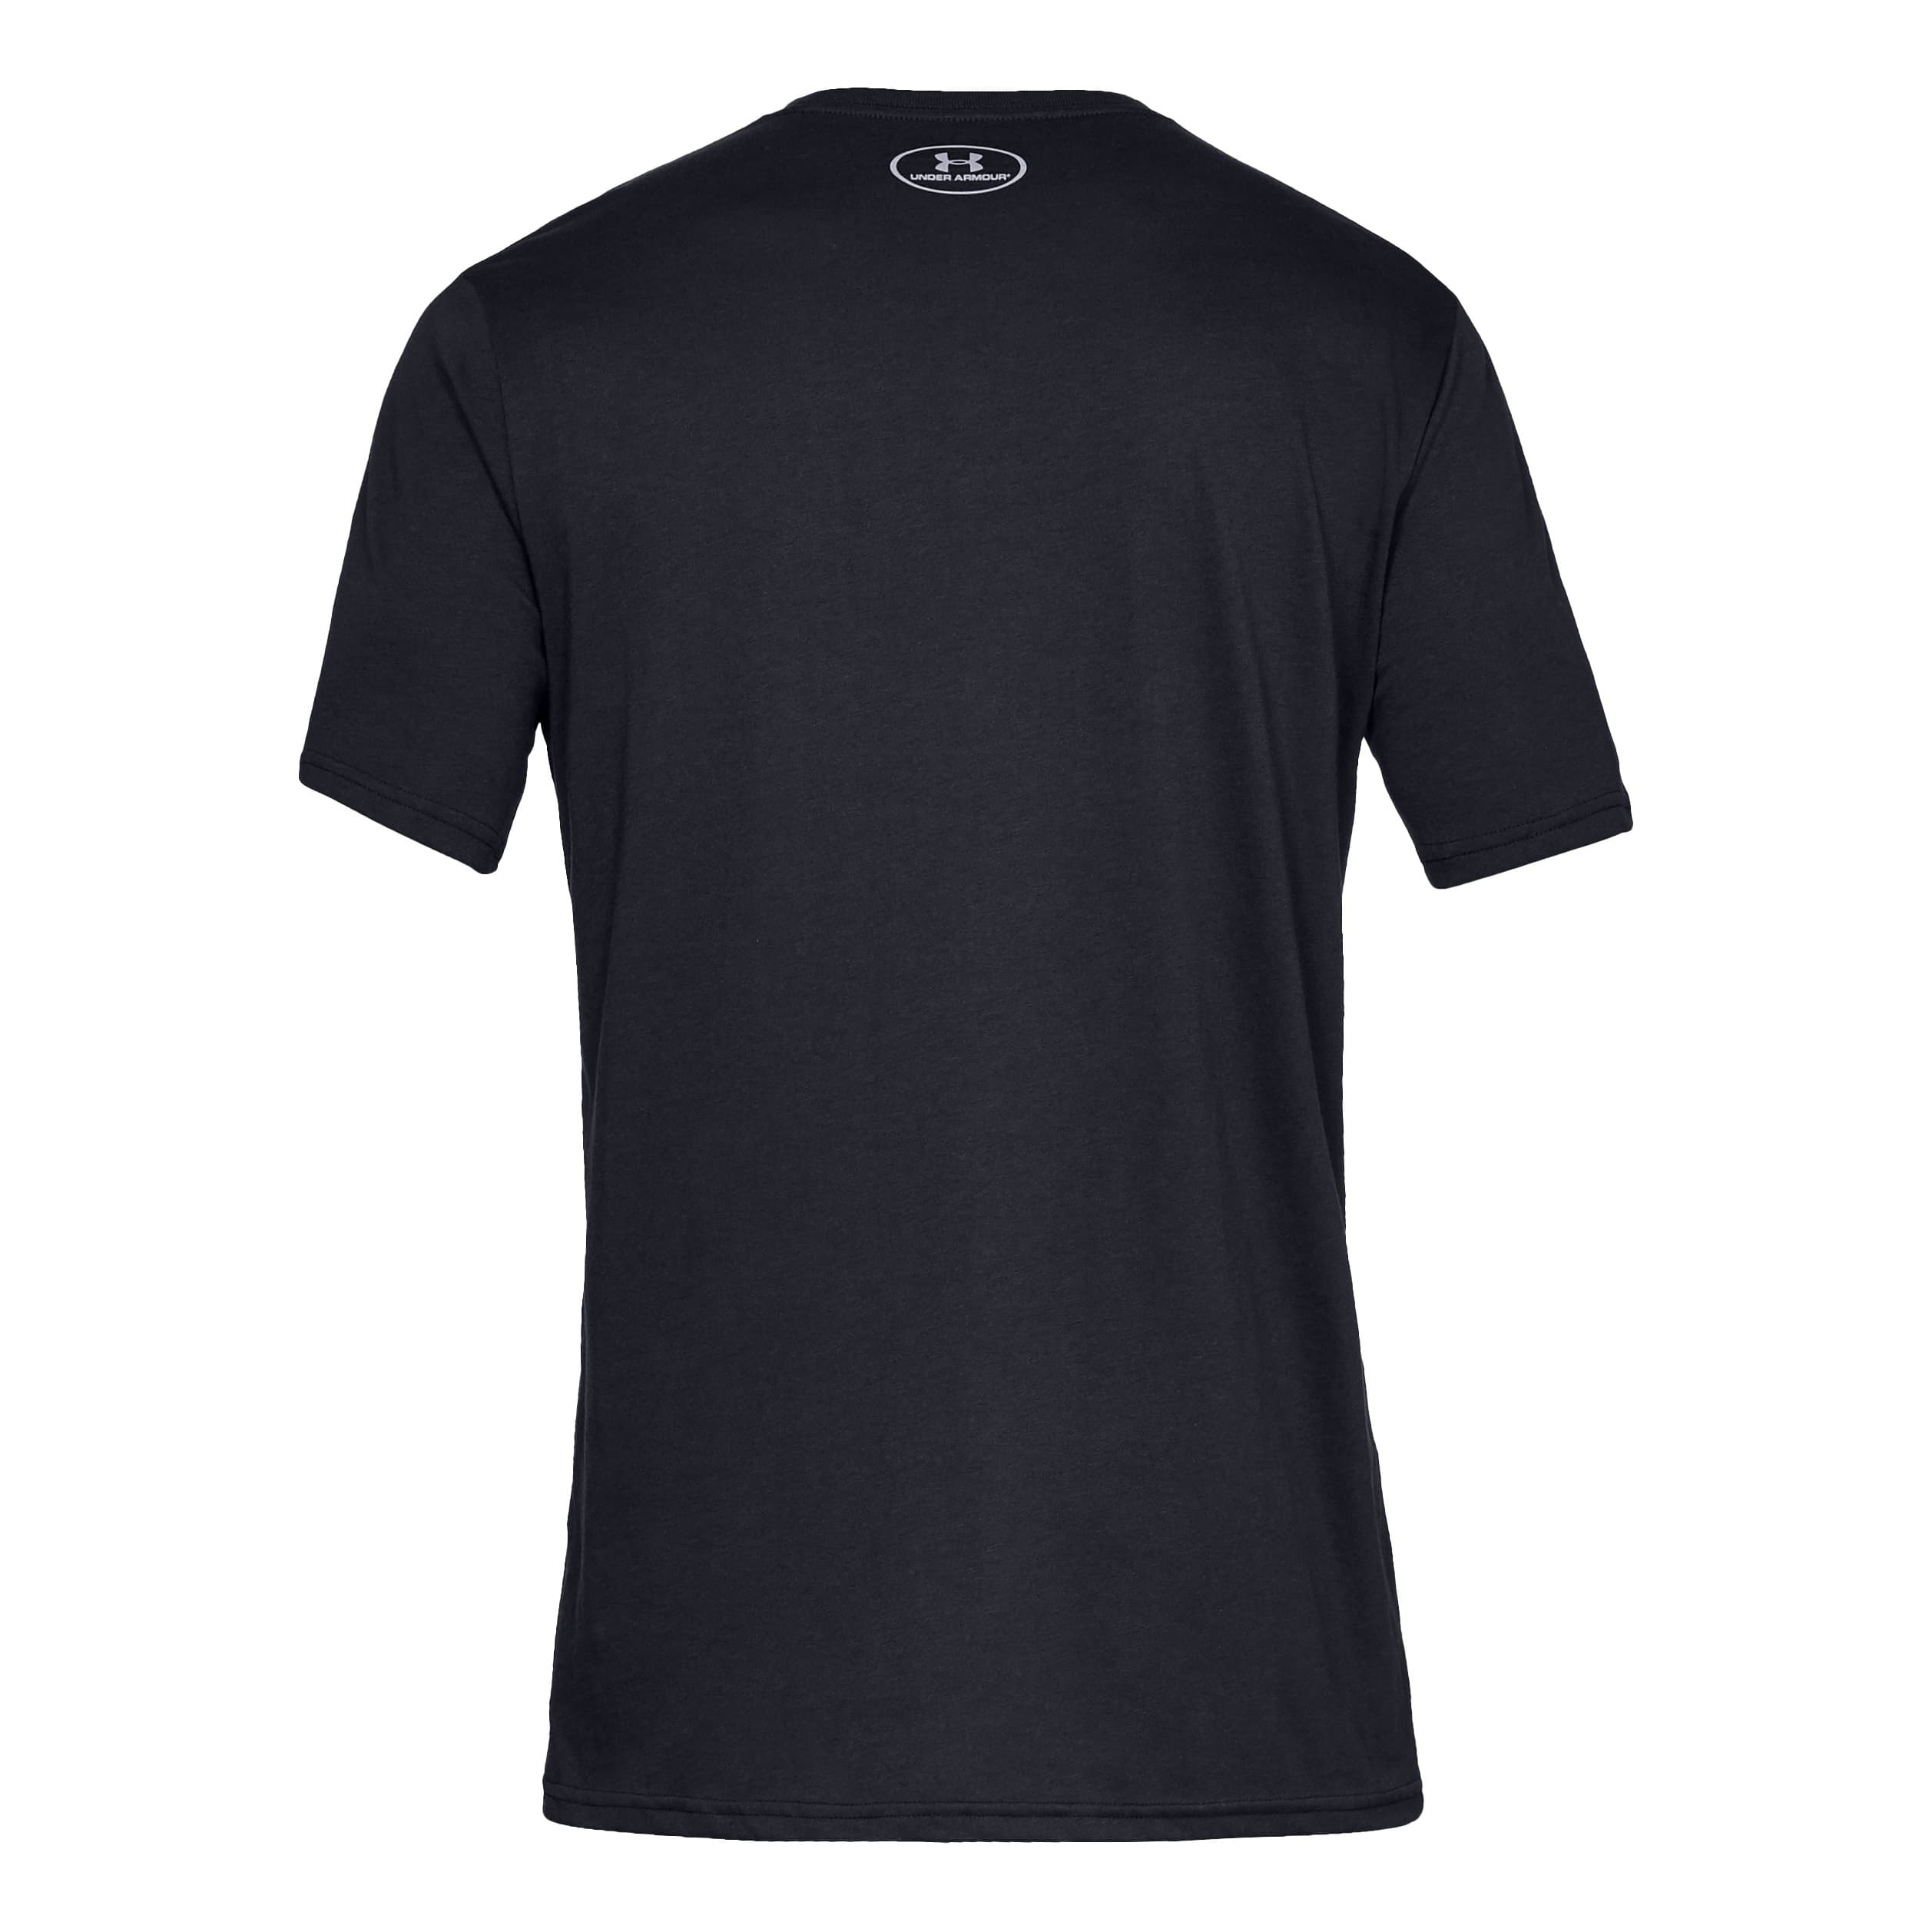 Under Armour Men's Athletic Shirts & Graphic T-Shirts - Hibbett